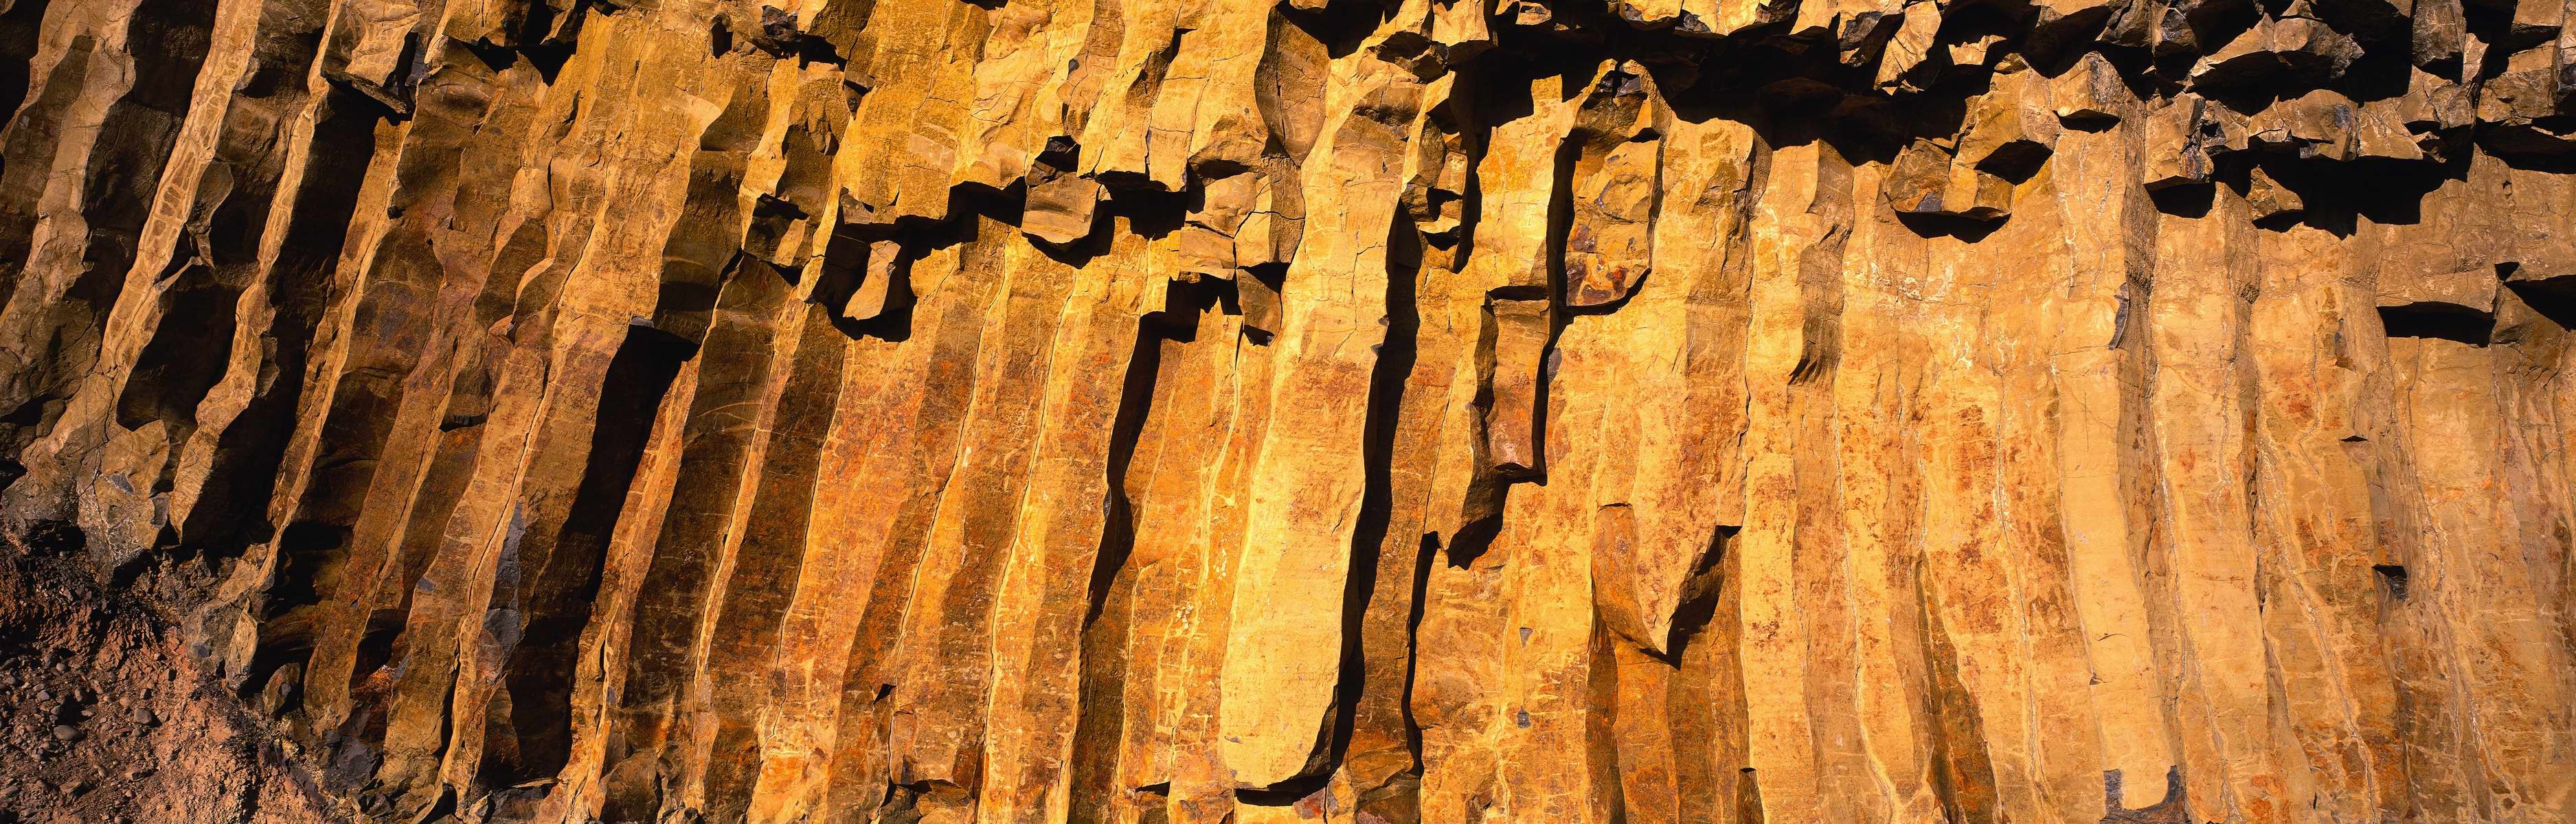 rock formations - desktop wallpaper